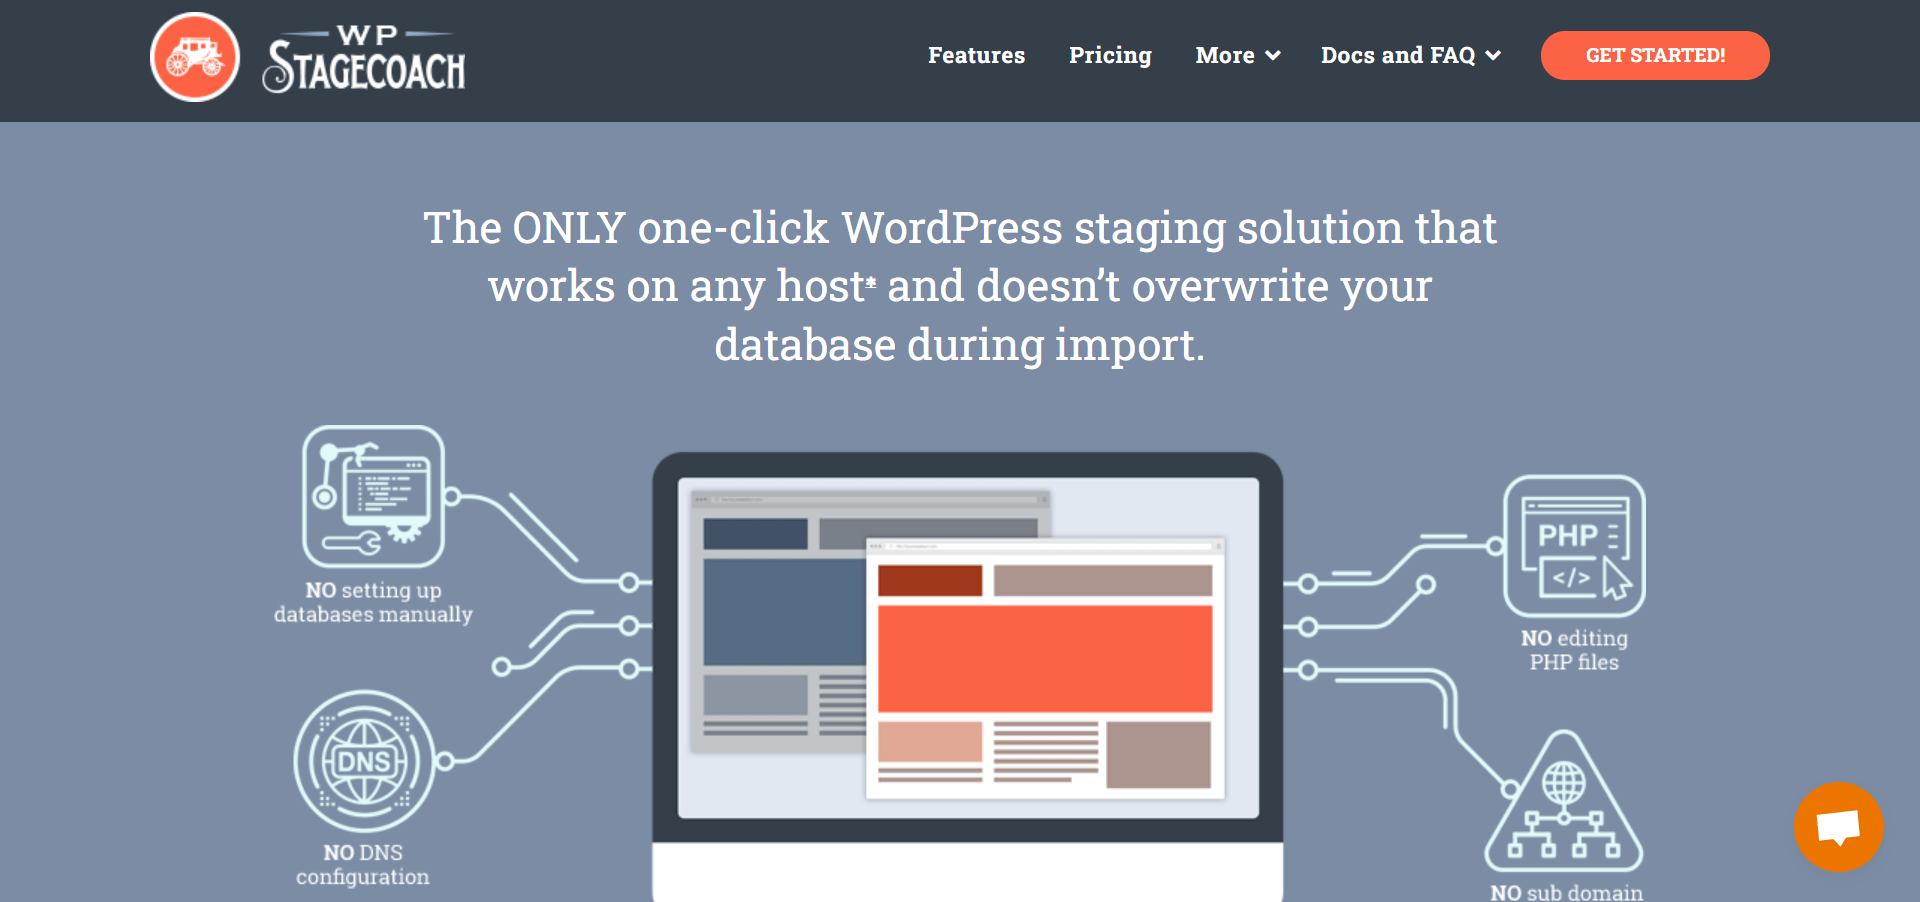 WP Stagecoach WordPress plugin